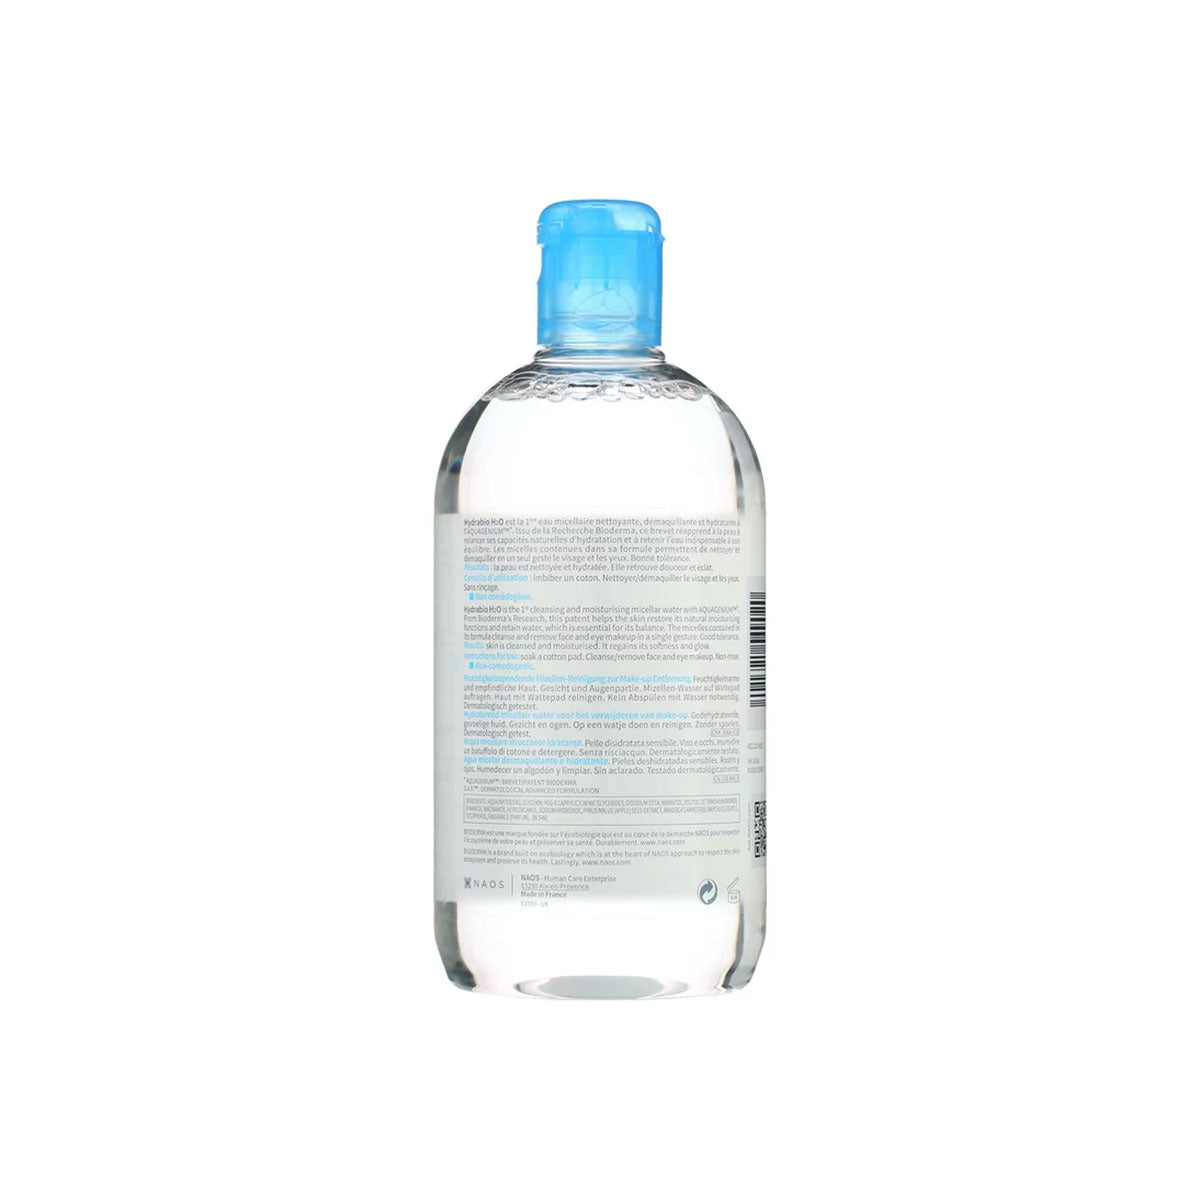 H2O Micellar Water Makeup Remover 500ml